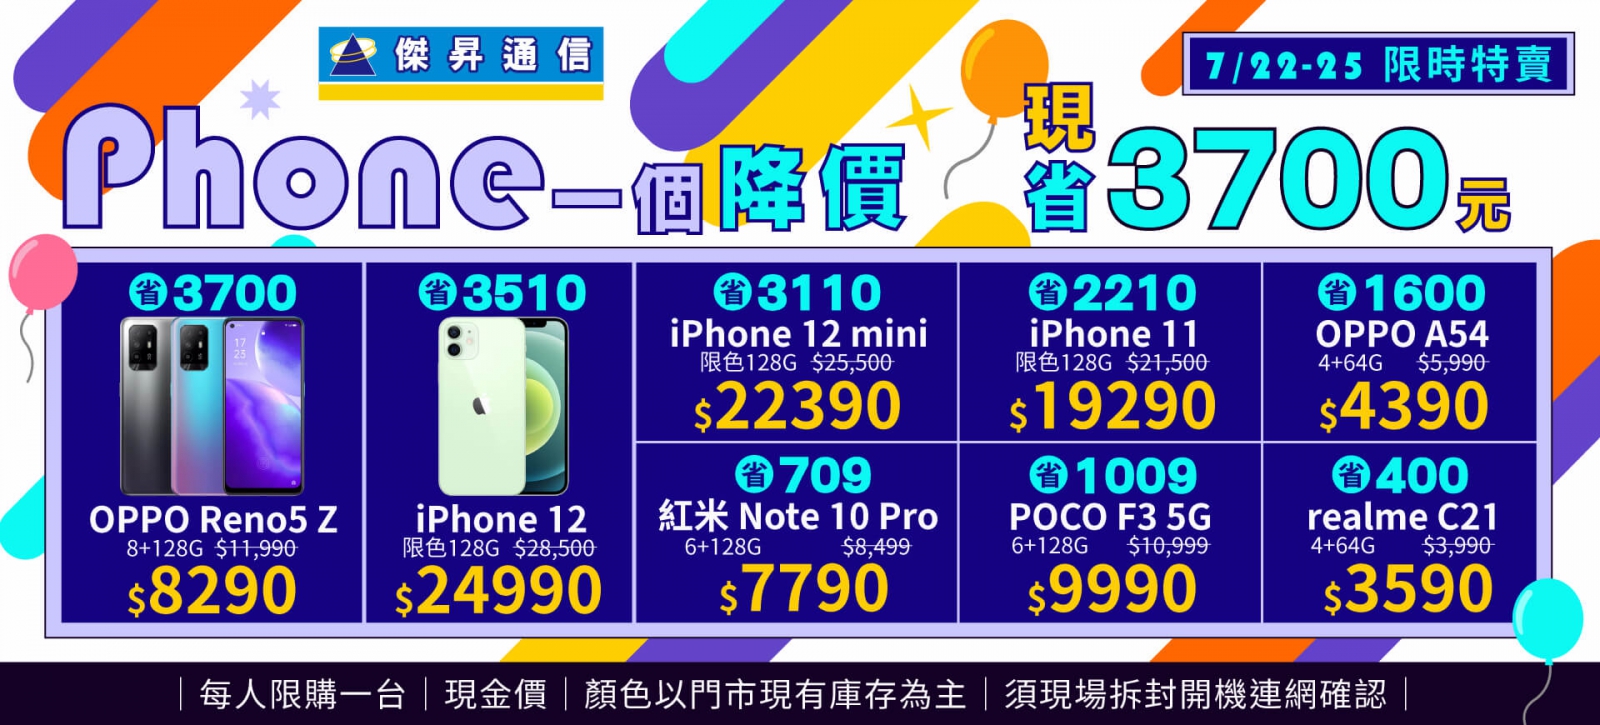 『Phone』一個降價！限時特賣～OPPO Reno5 Z購機現省3700元